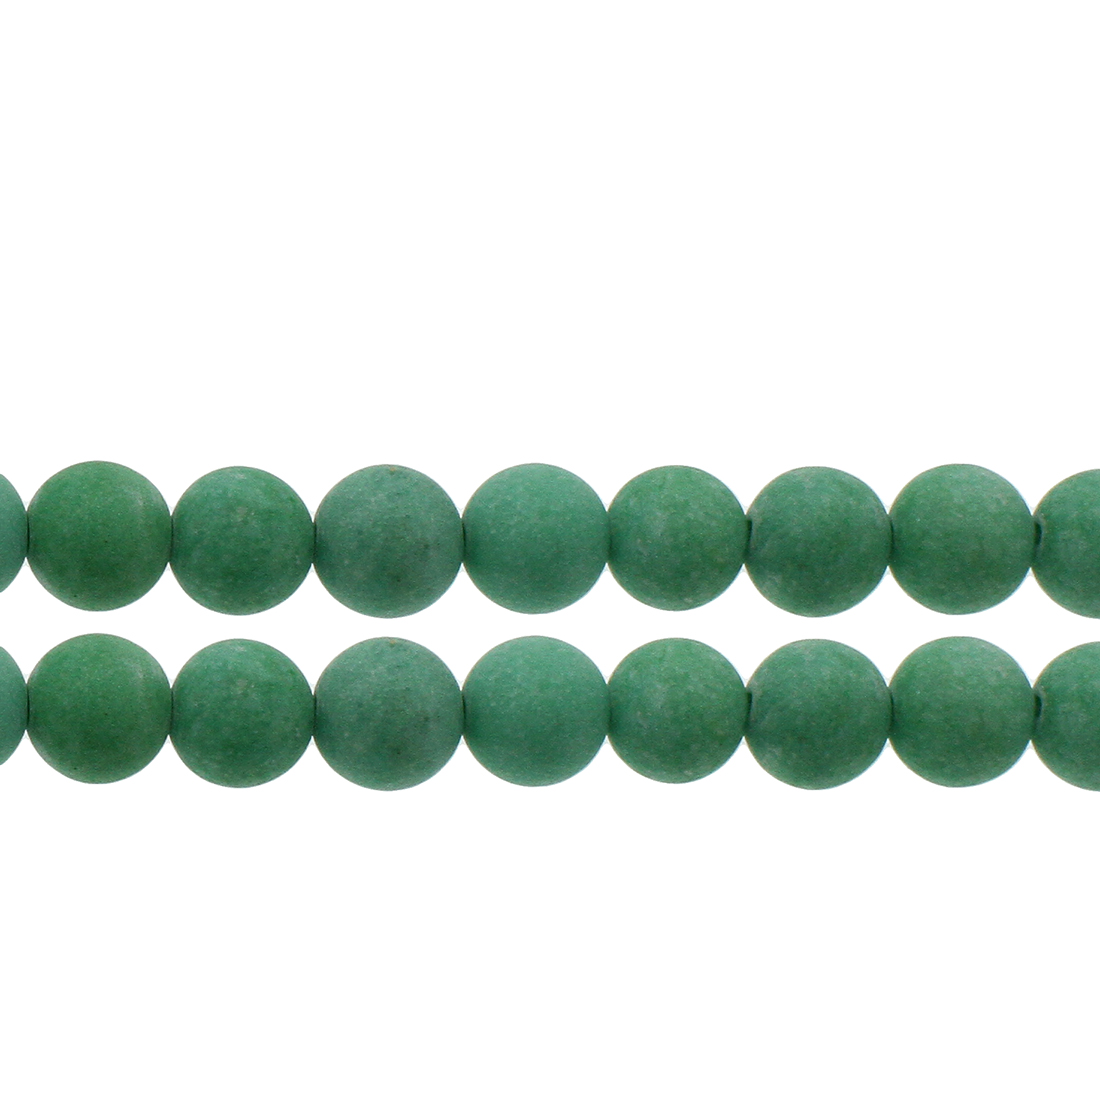 1:vert